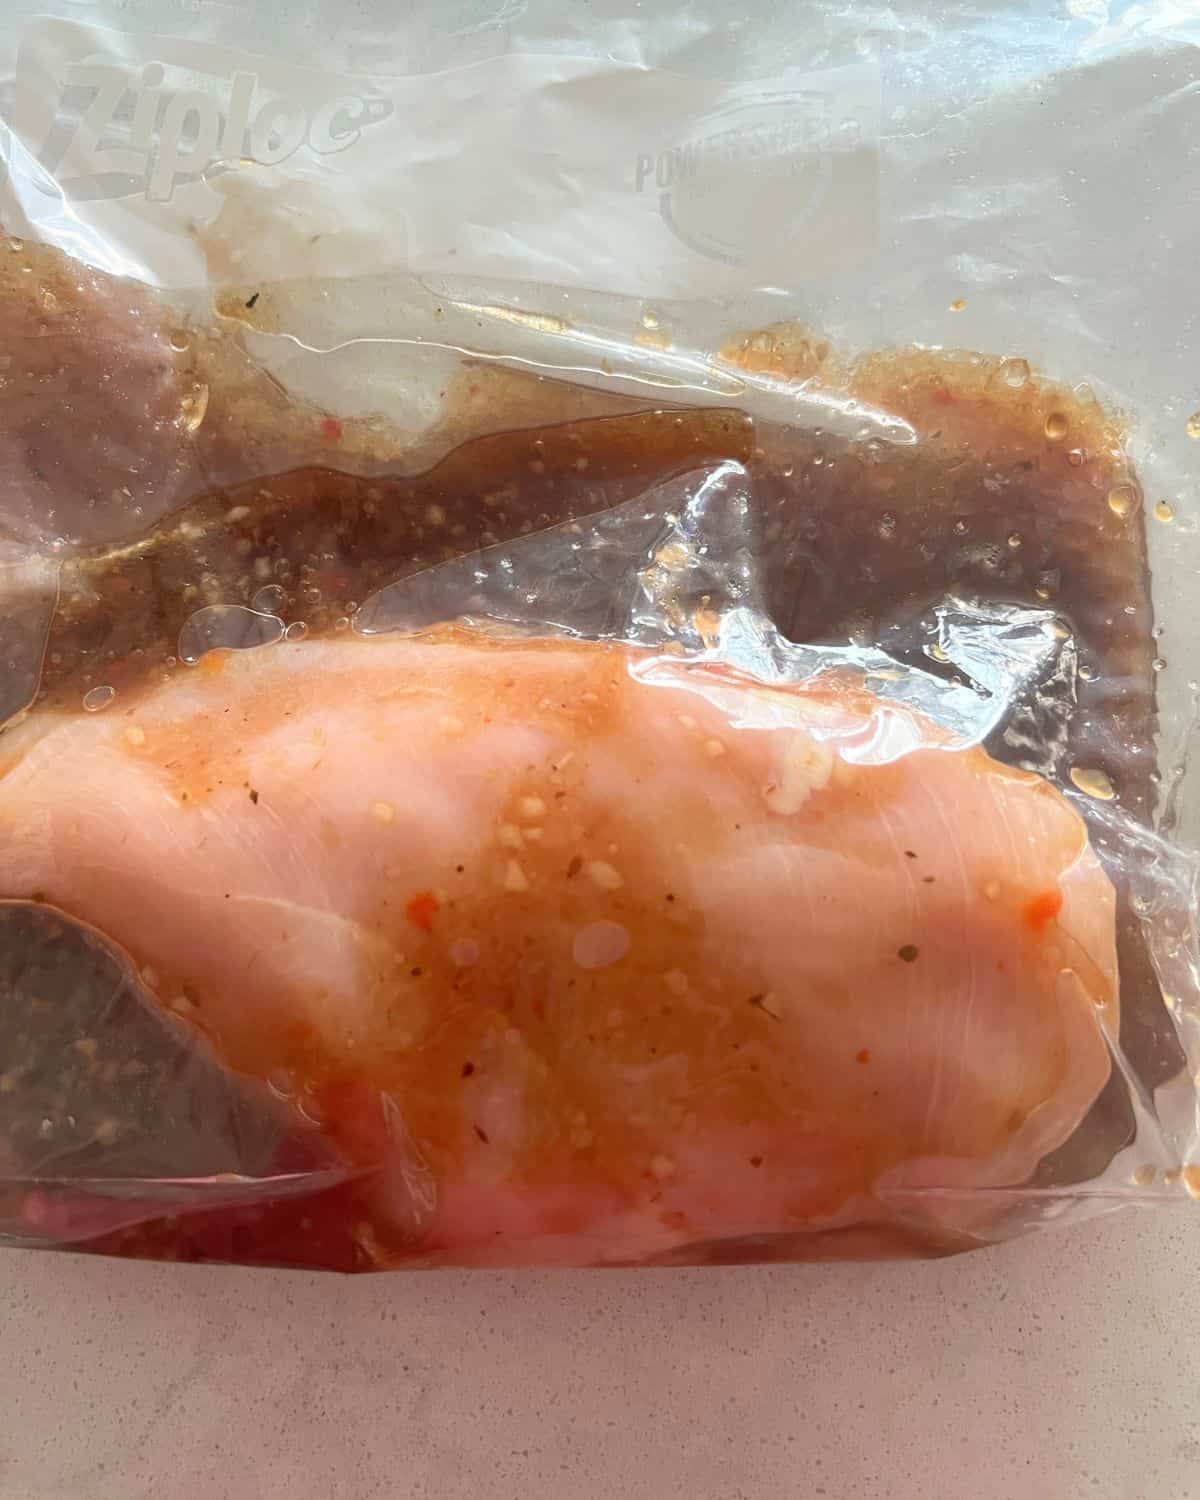 Grilled marinade for chicken in a freezer storage bag with chicken. 